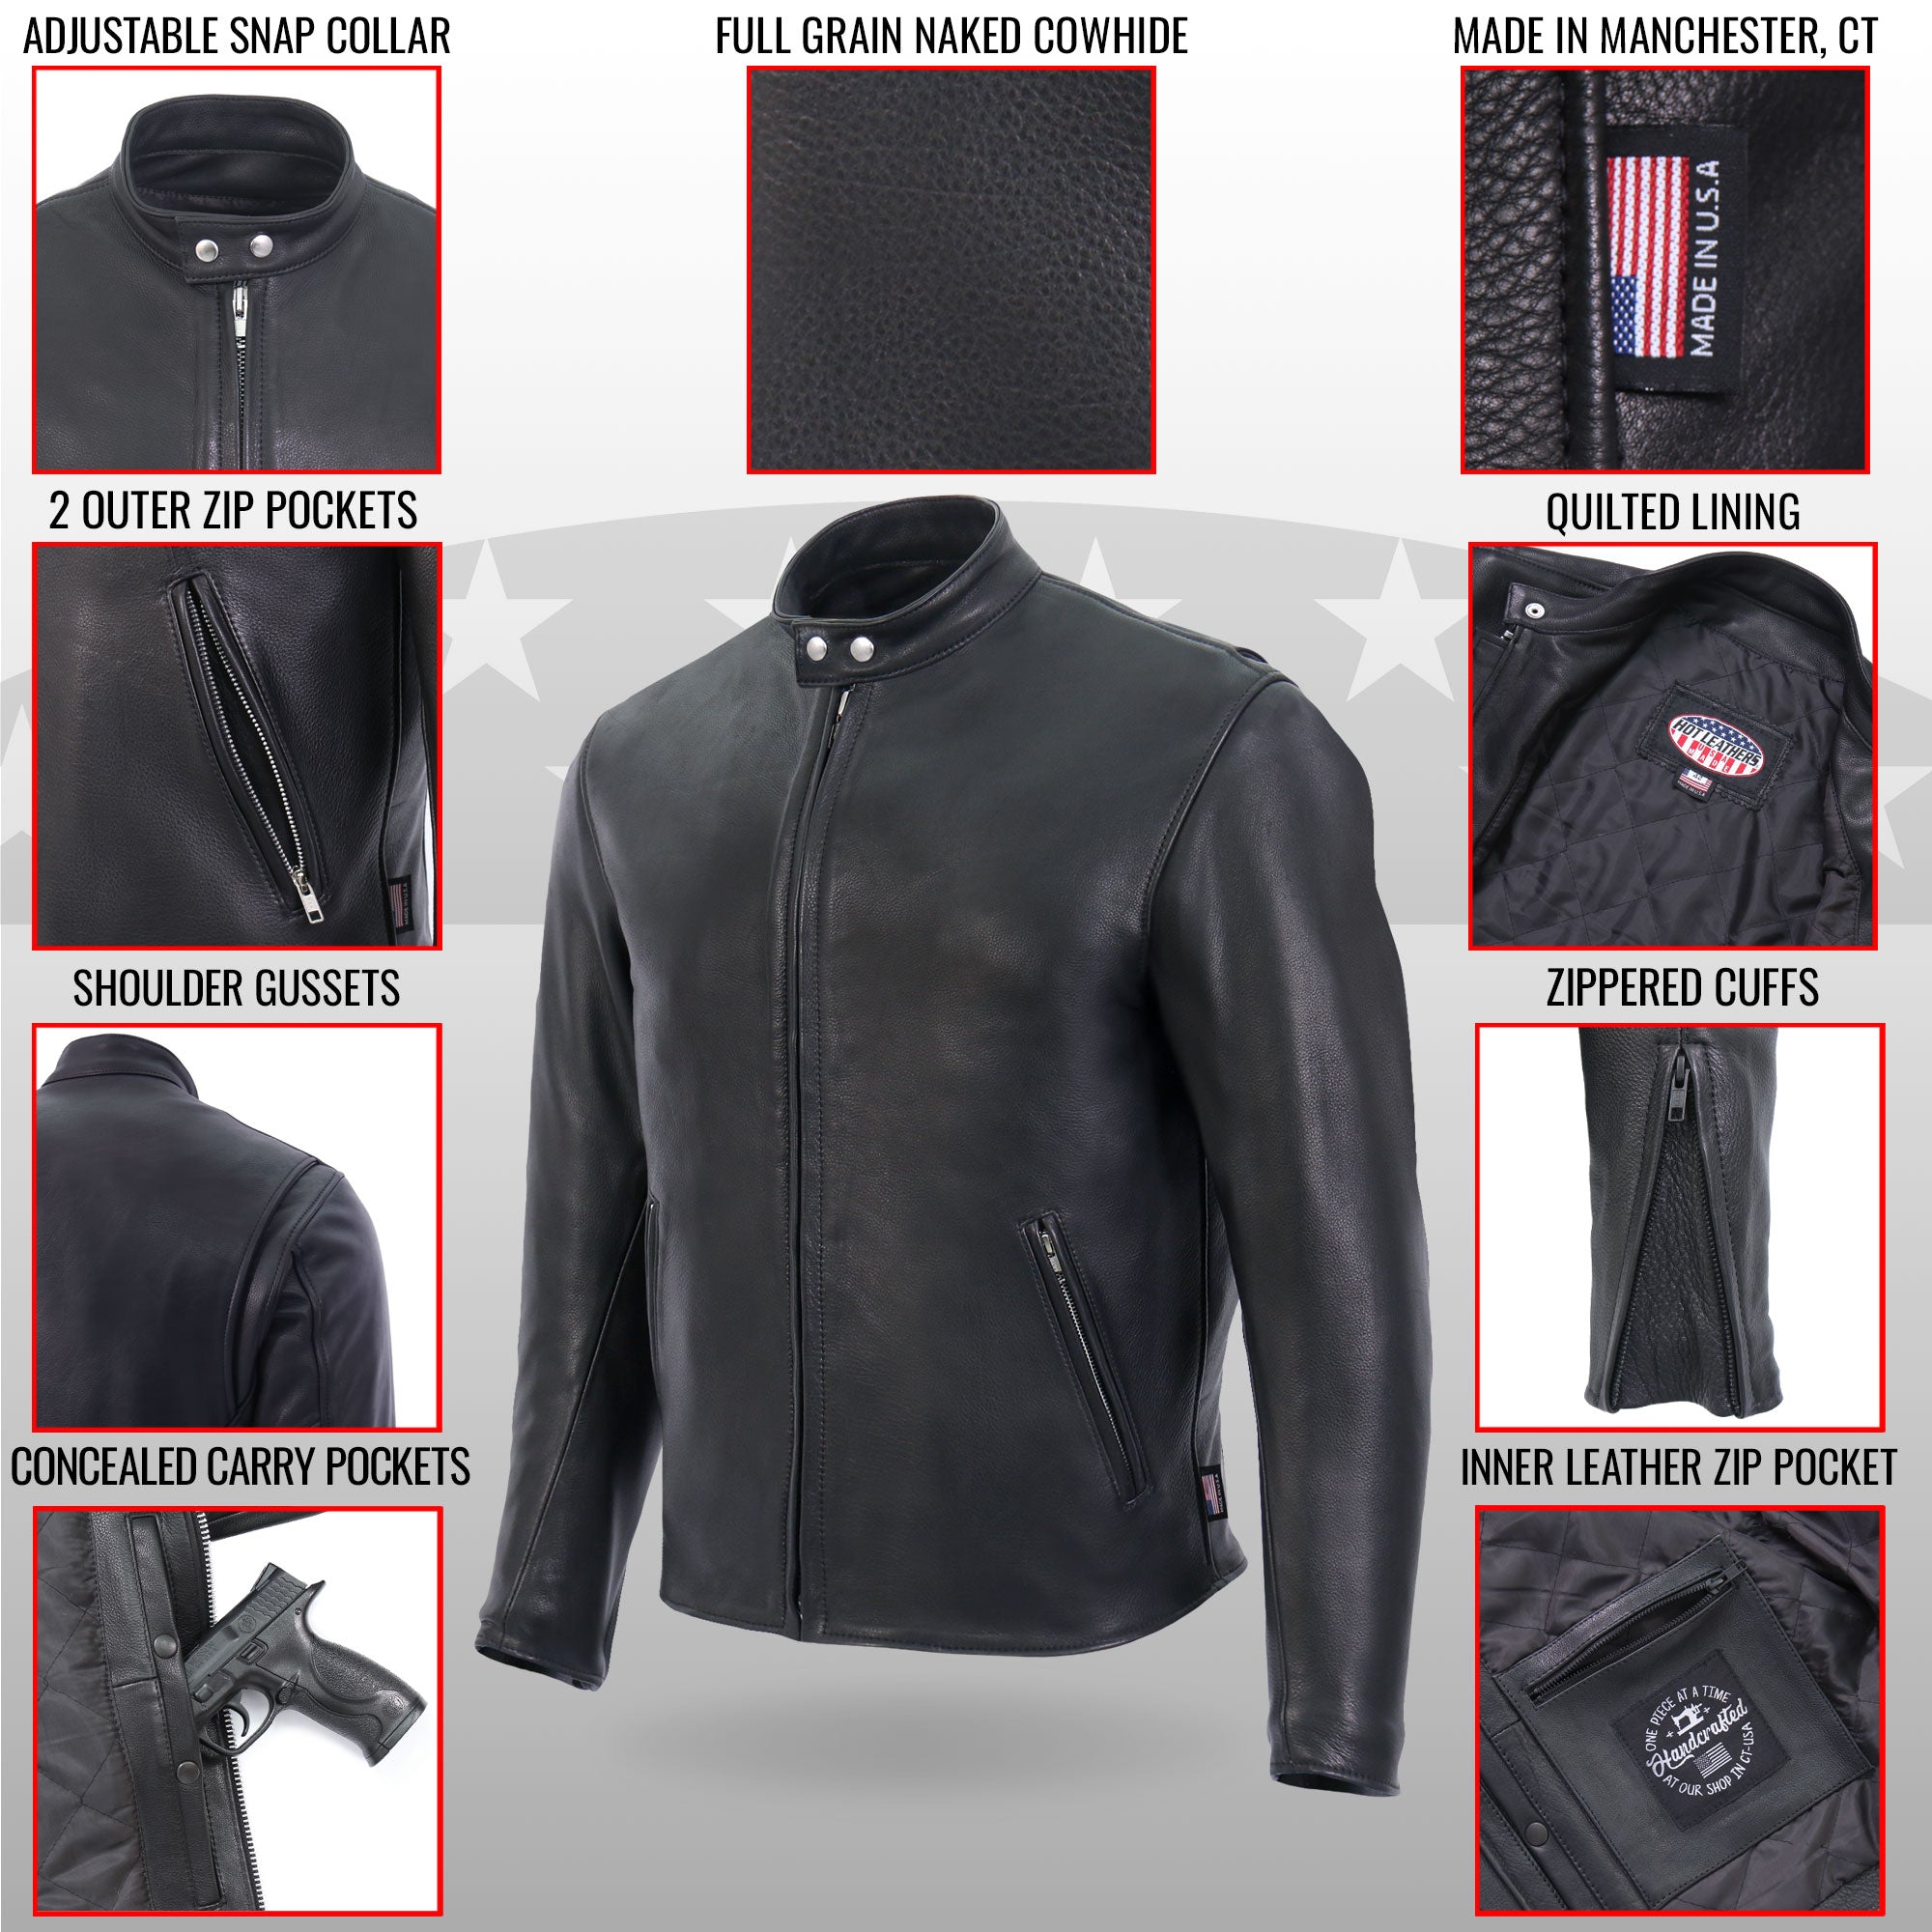 Men's Size 48 Schott NYC Black Leather Plaid Lined Motor Jacket USA 